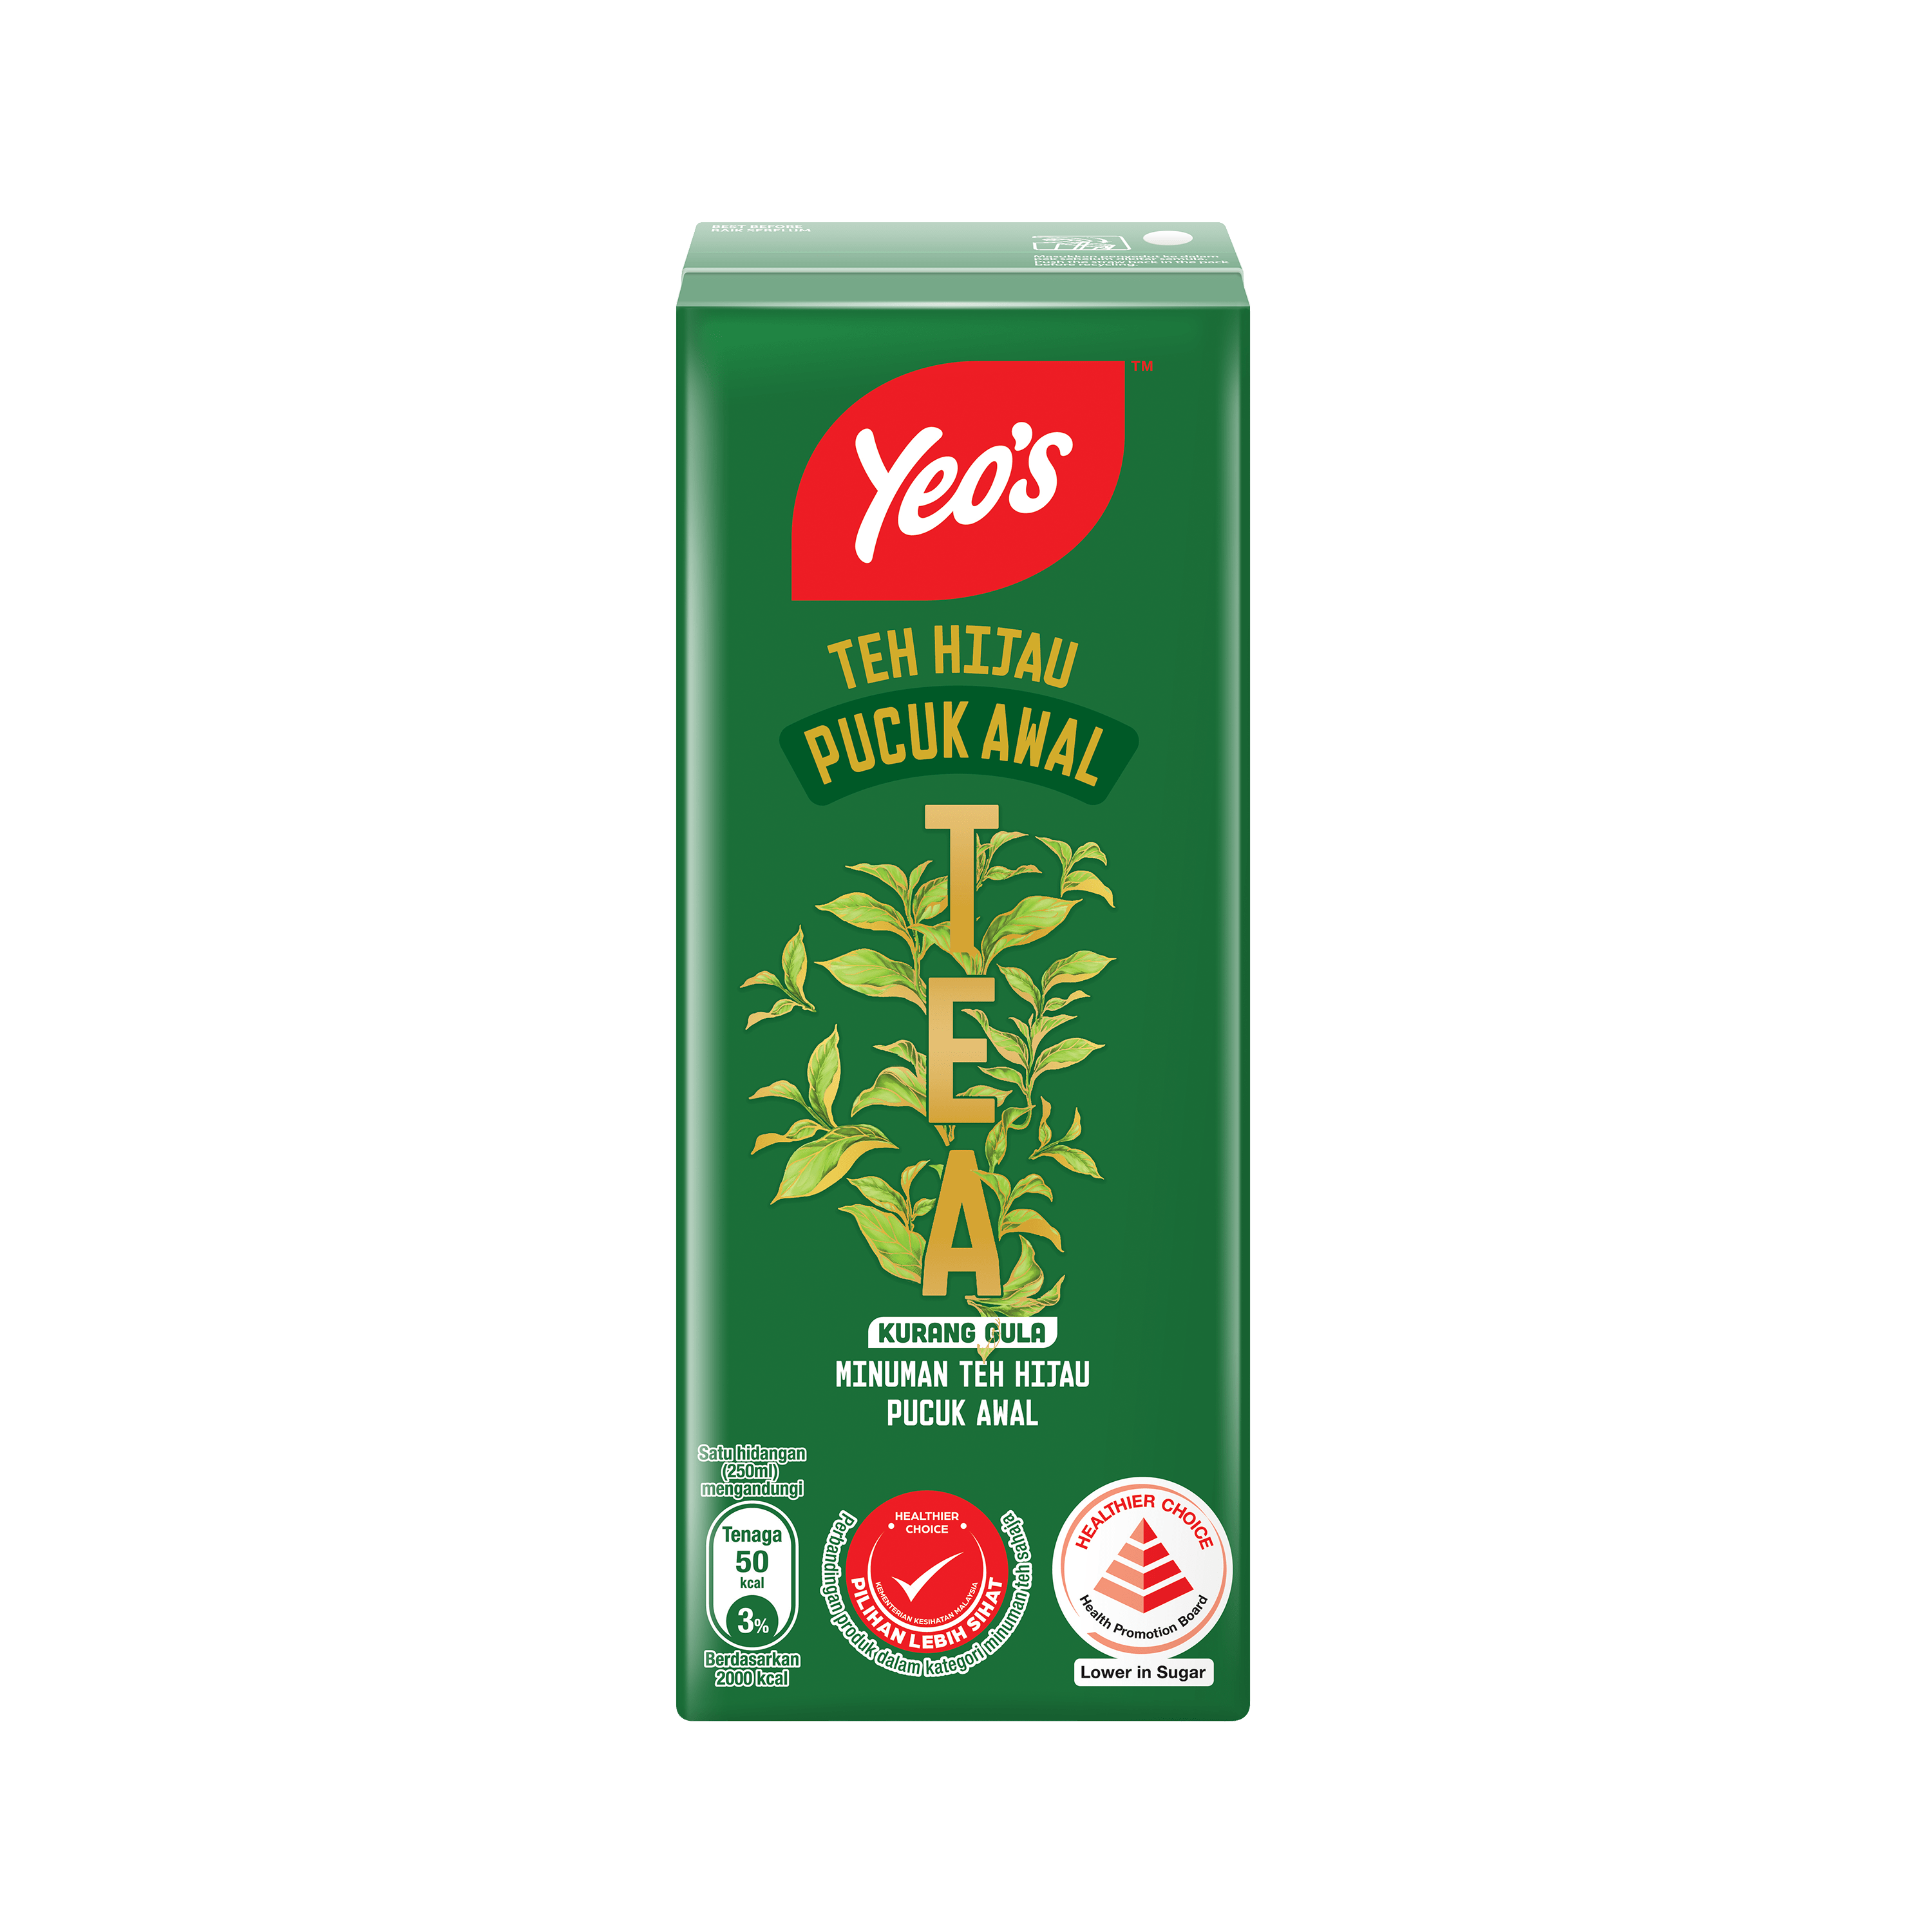 First Harvest Green Tea - Yeo's